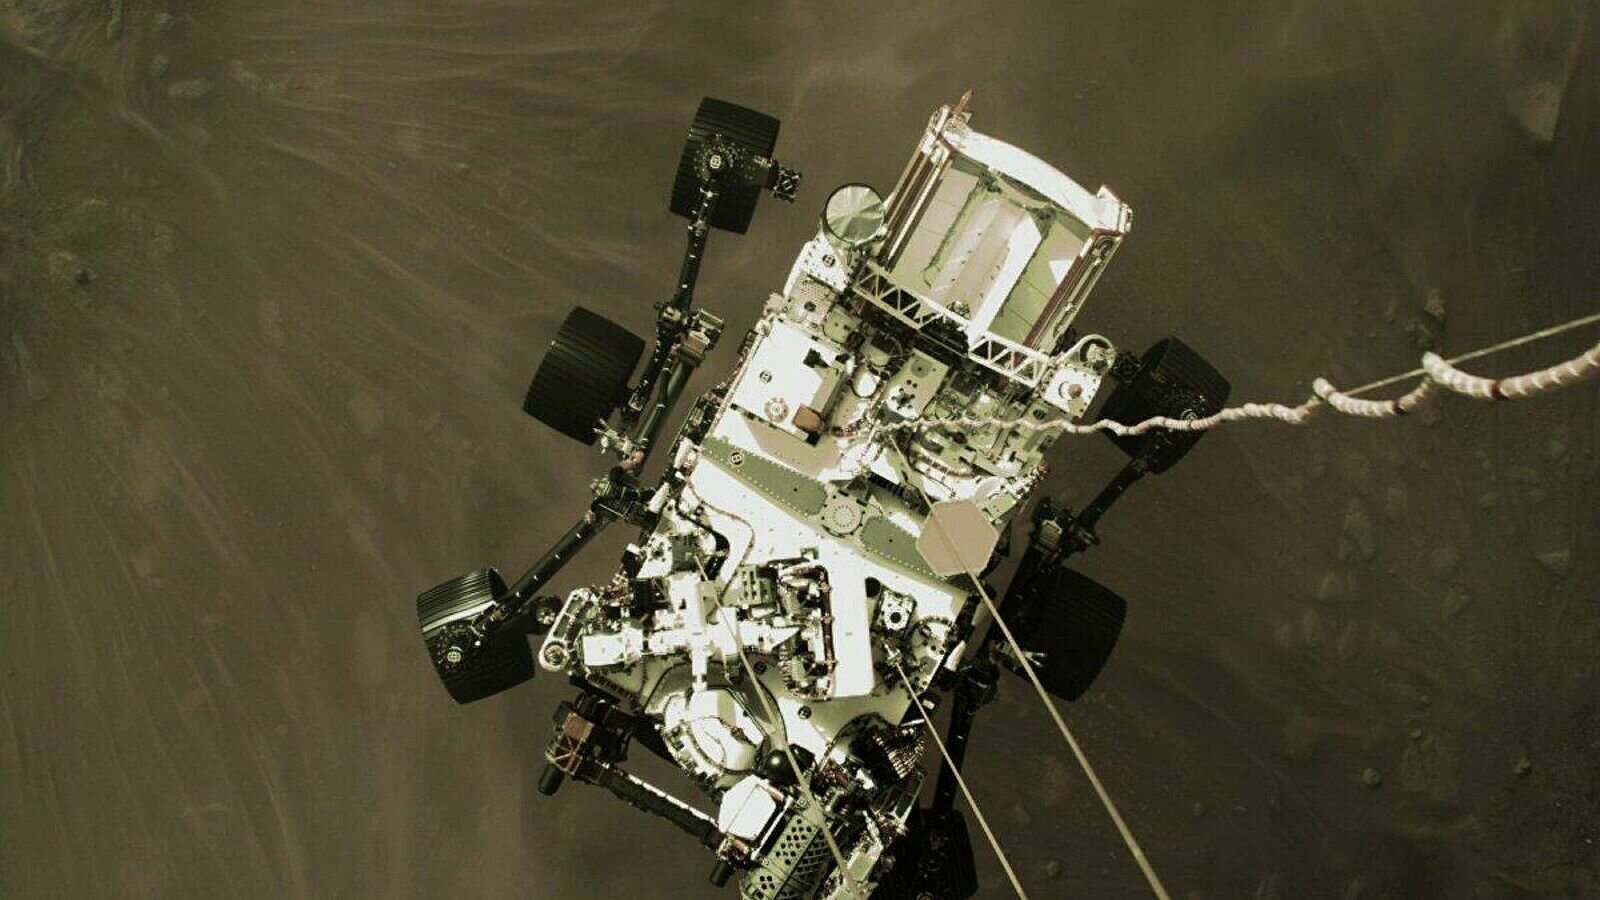 НАСА показало кадры посадки ровера на Марс 